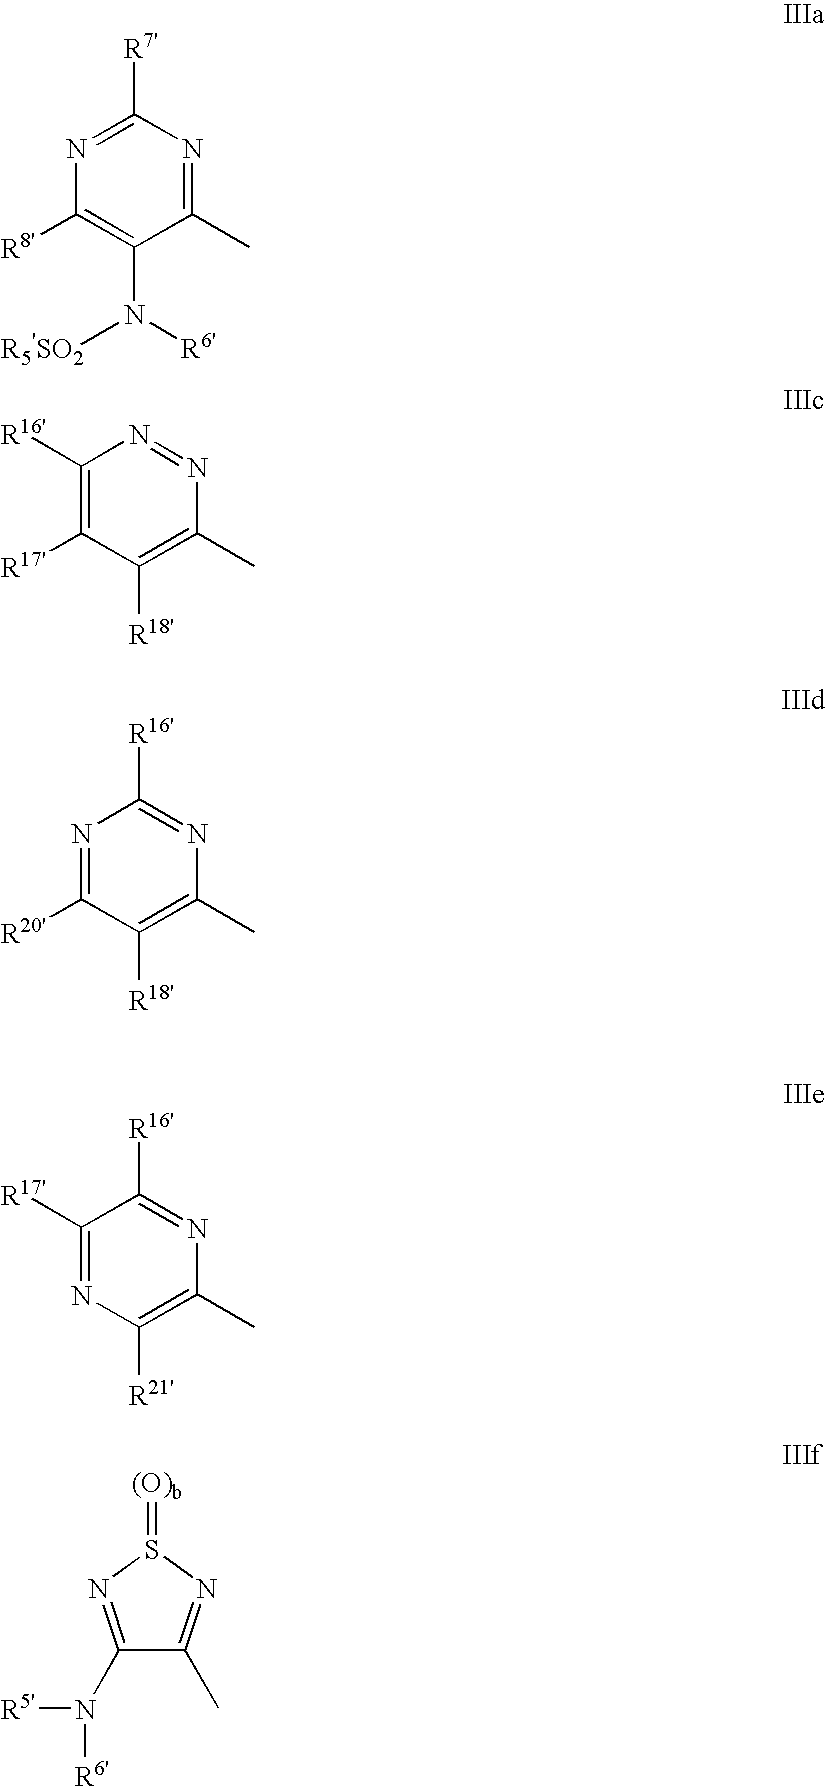 Phenylalanine derivatives as alpha 4 integrin inhibitors